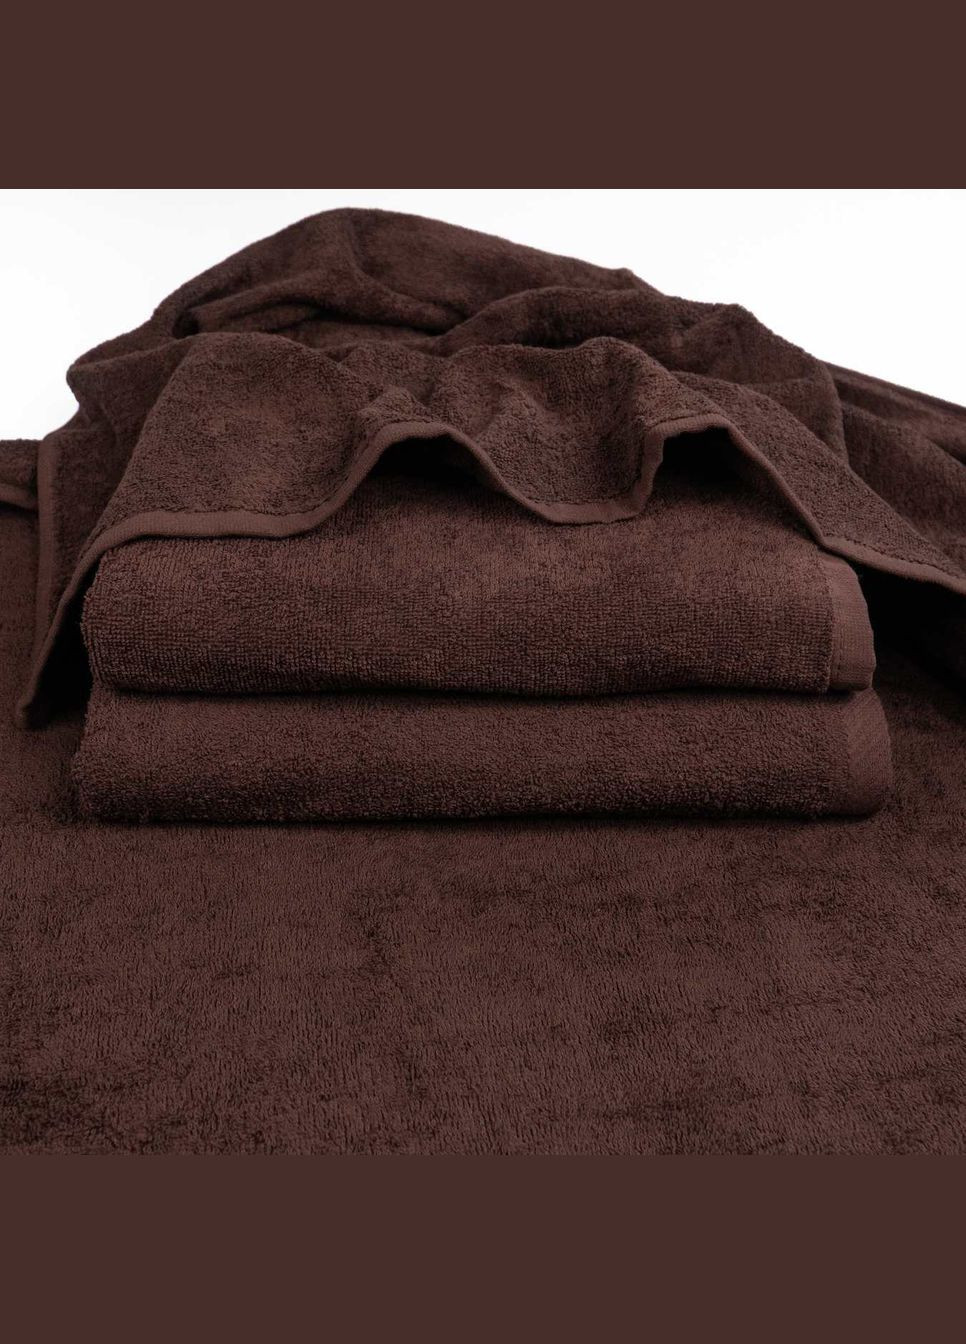 GM Textile набор махровых полотенец 2шт 50х90см, 70х140см 400г/м2 () коричневый производство -